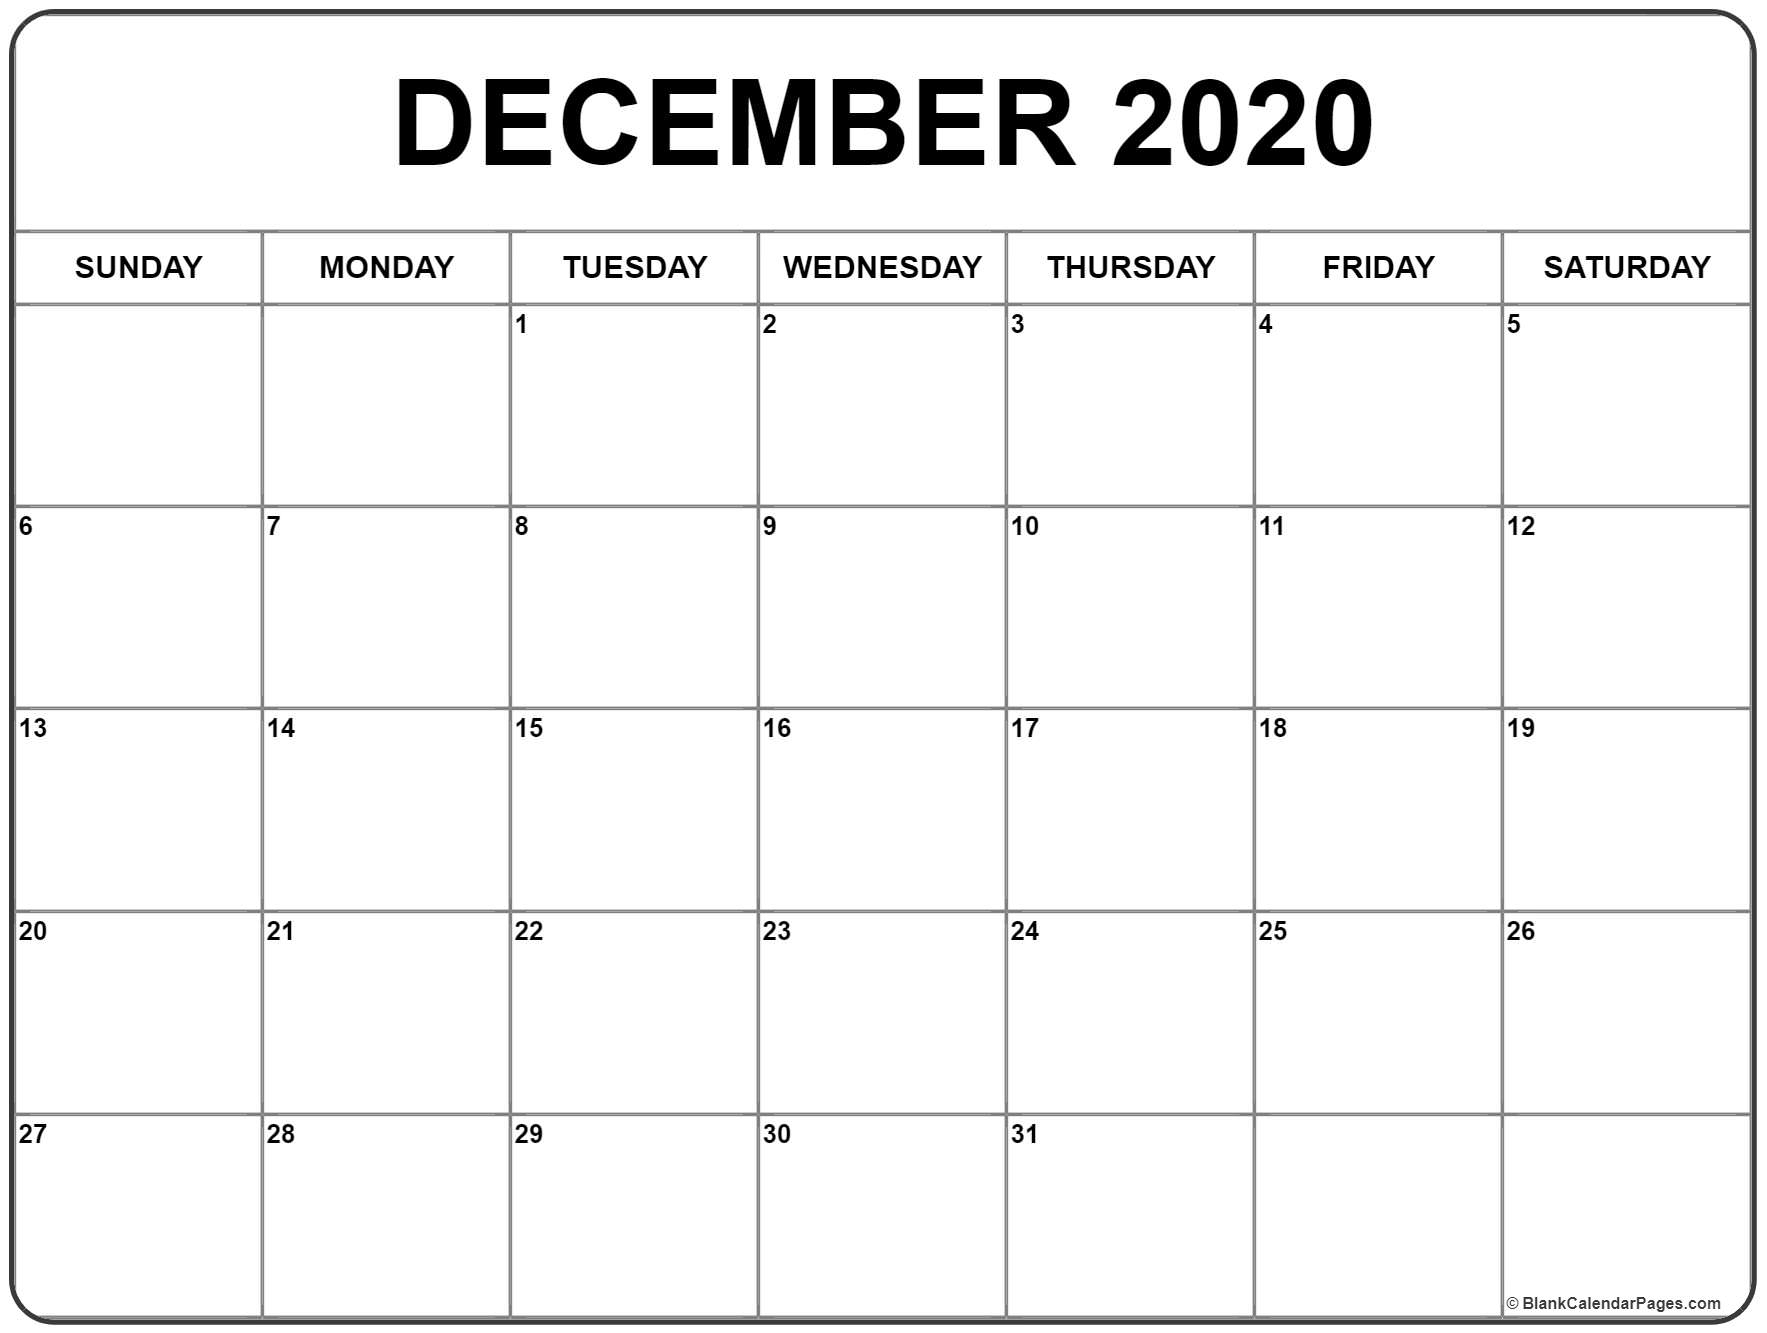 January Thru December 2020 Printable Monthly Calendar